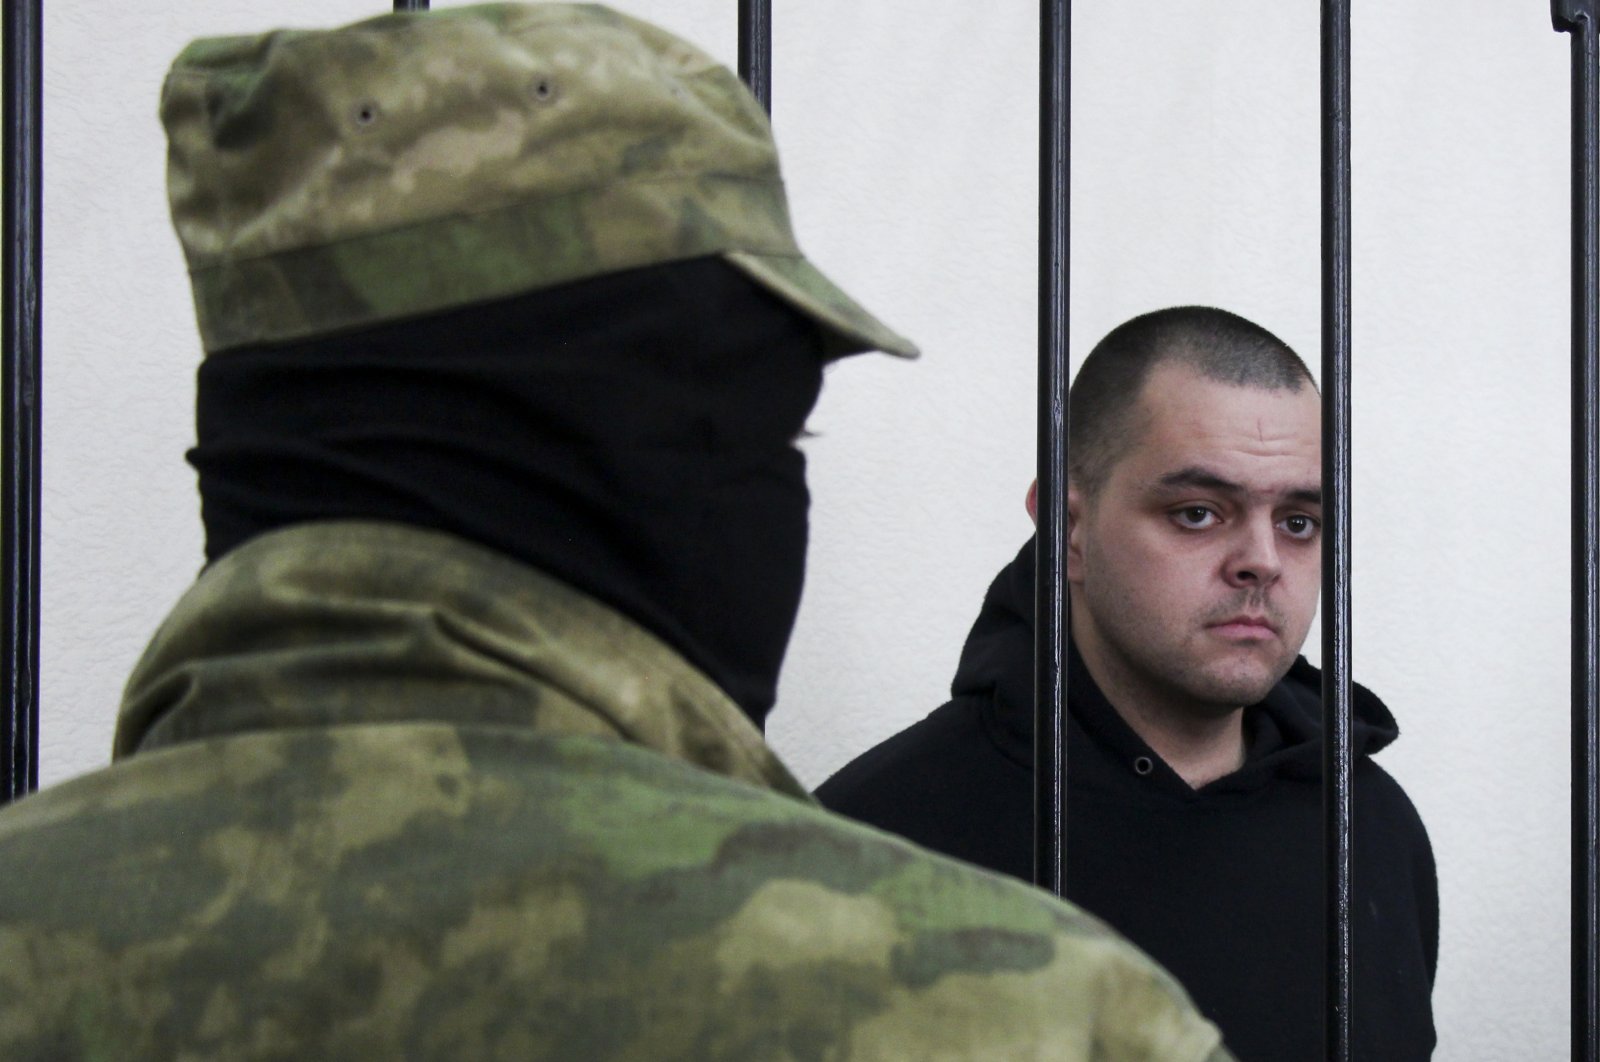 British citizen Aiden Aslin stands behind bars in a courtroom in Donetsk, eastern Ukraine, June 9, 2022. (AP Photo)